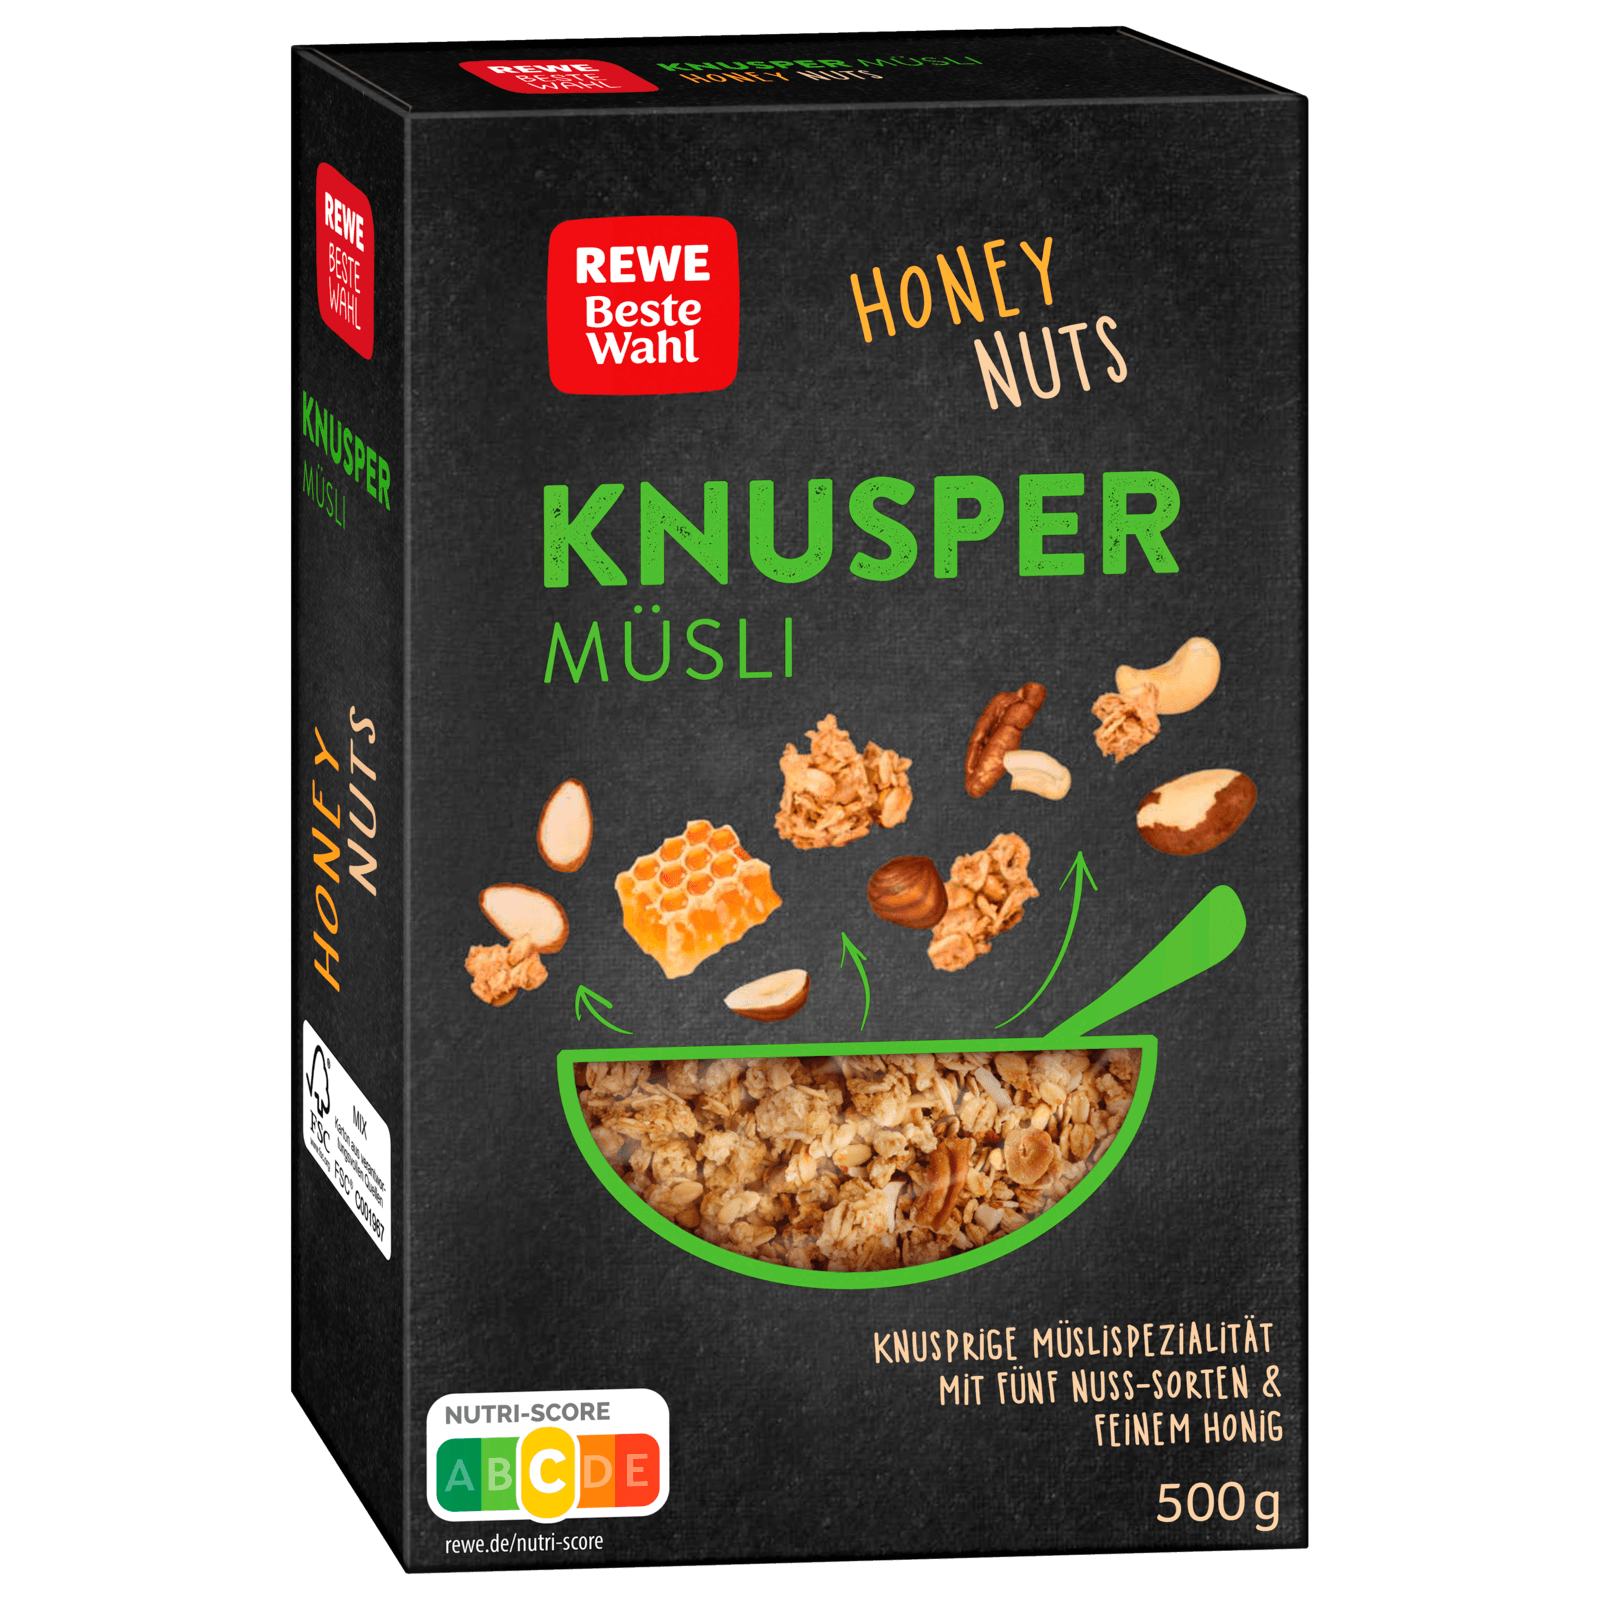 REWE Beste Wahl Knusper Müsli Honey Nuts 500g bei REWE online bestellen!